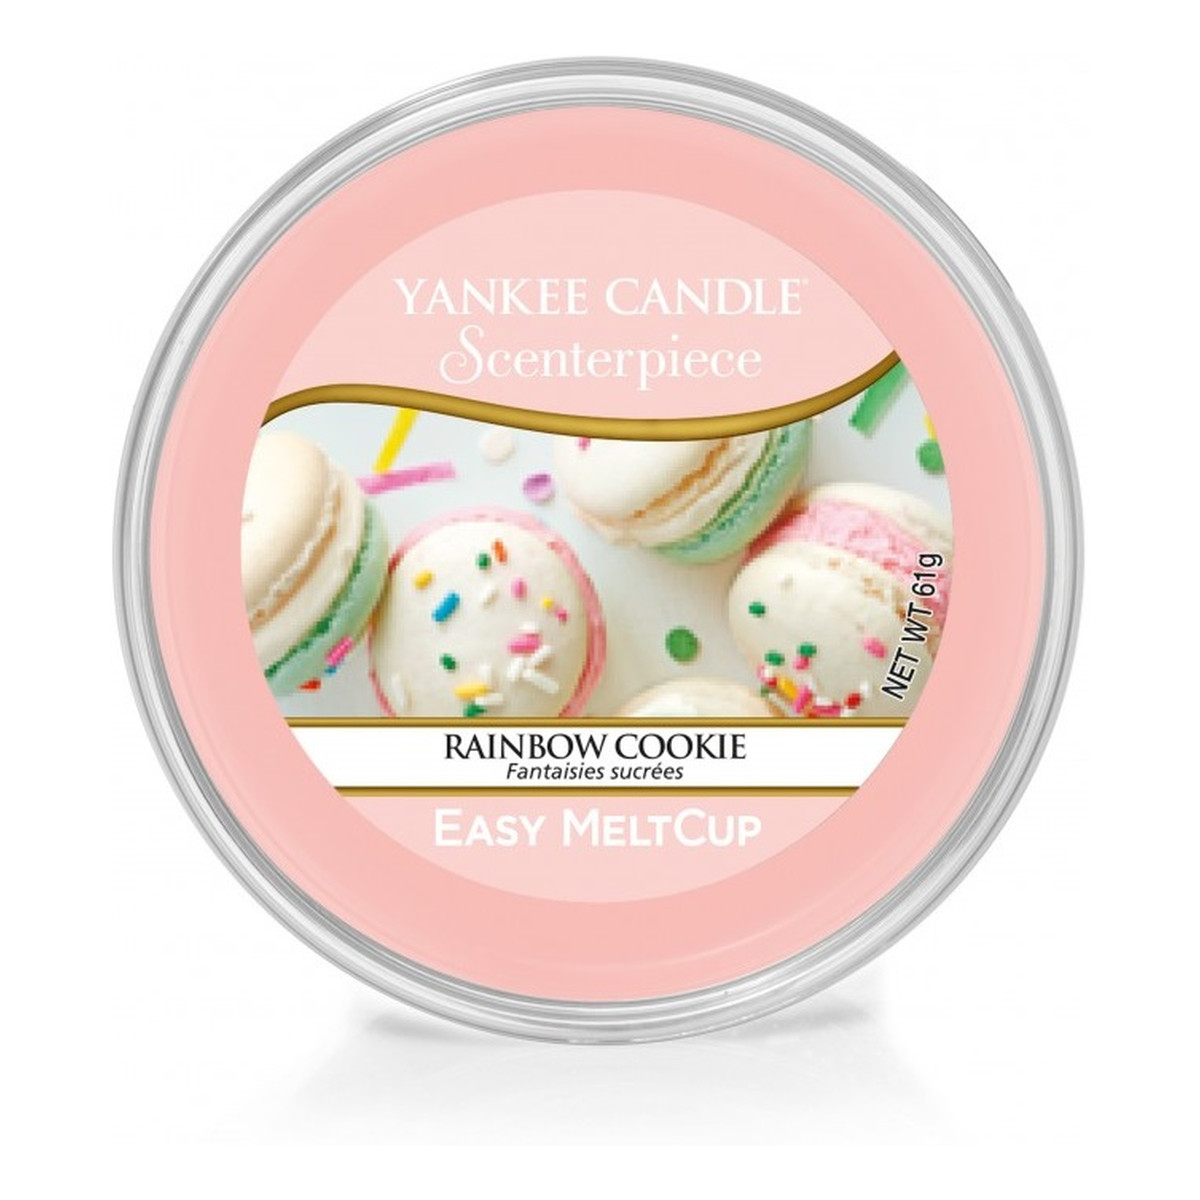 Yankee Candle Scenterpiece Easy Melt Cup wosk do elektrycznego kominka Rainbow Cookie 61g